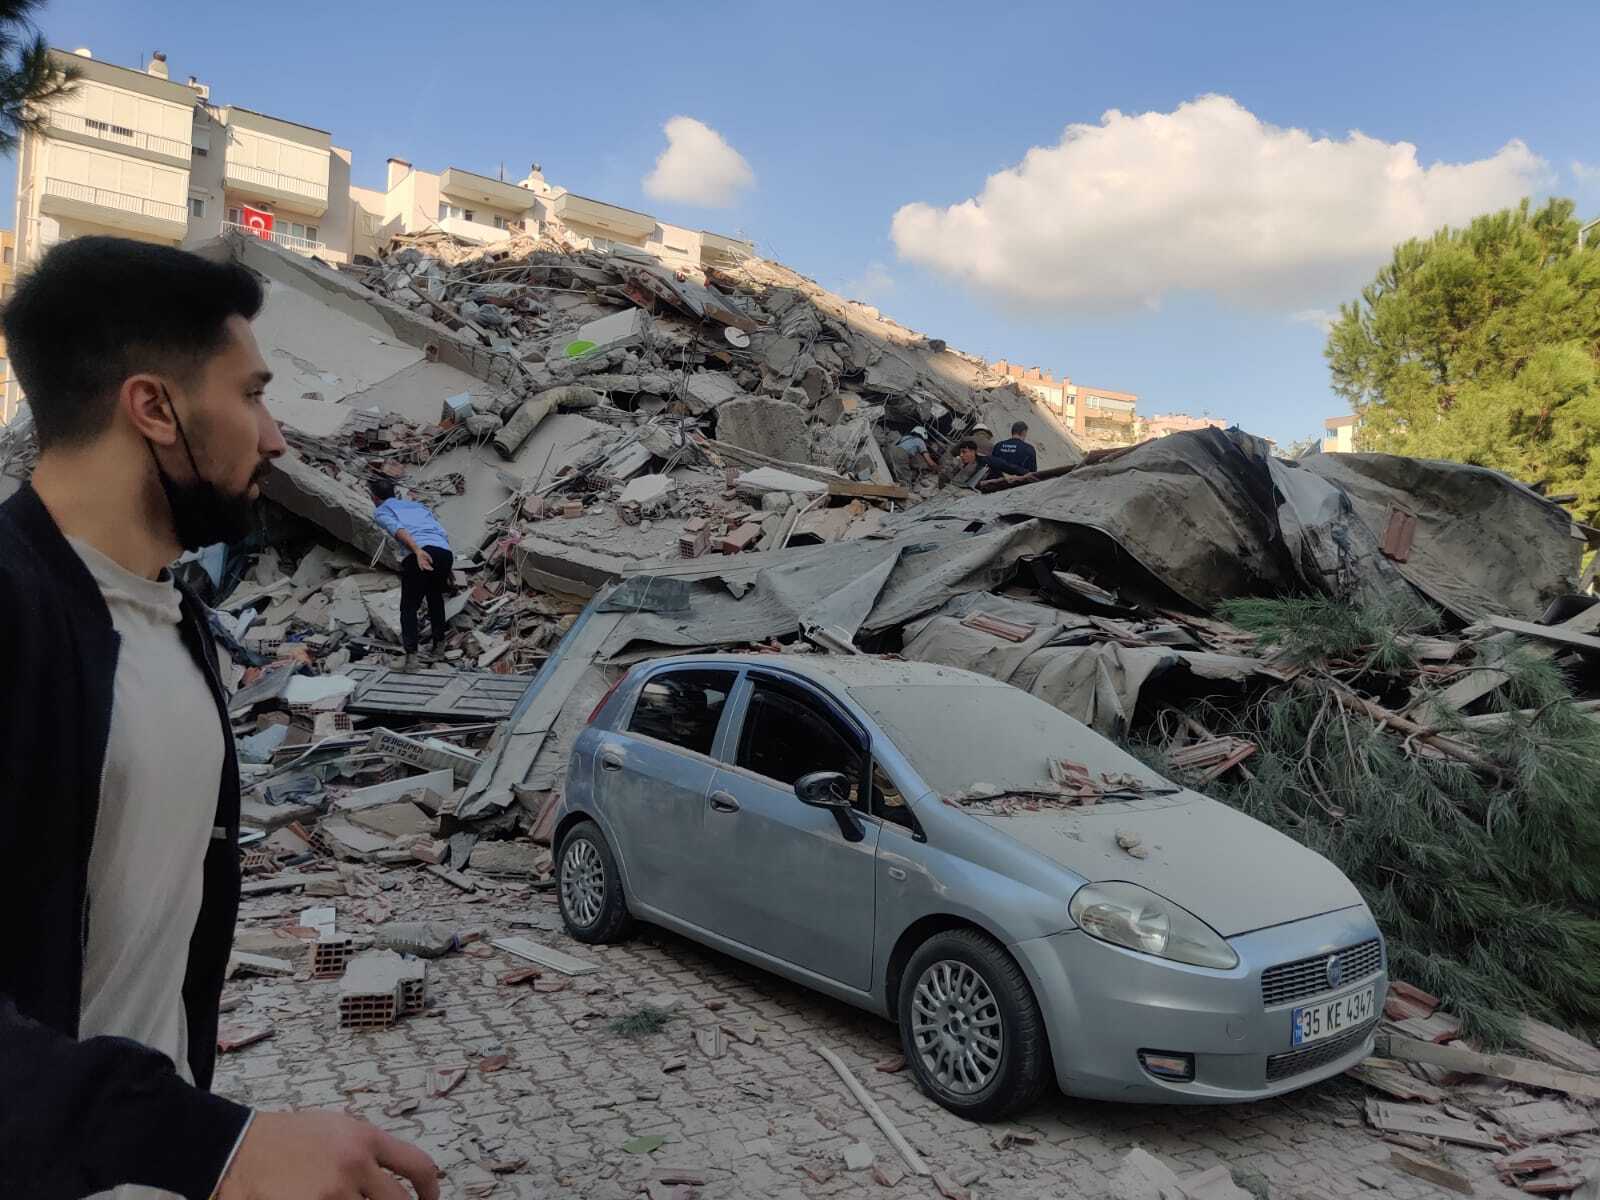 Tsunami fears after massive earthquake hits Turkey and Greece - latest updates